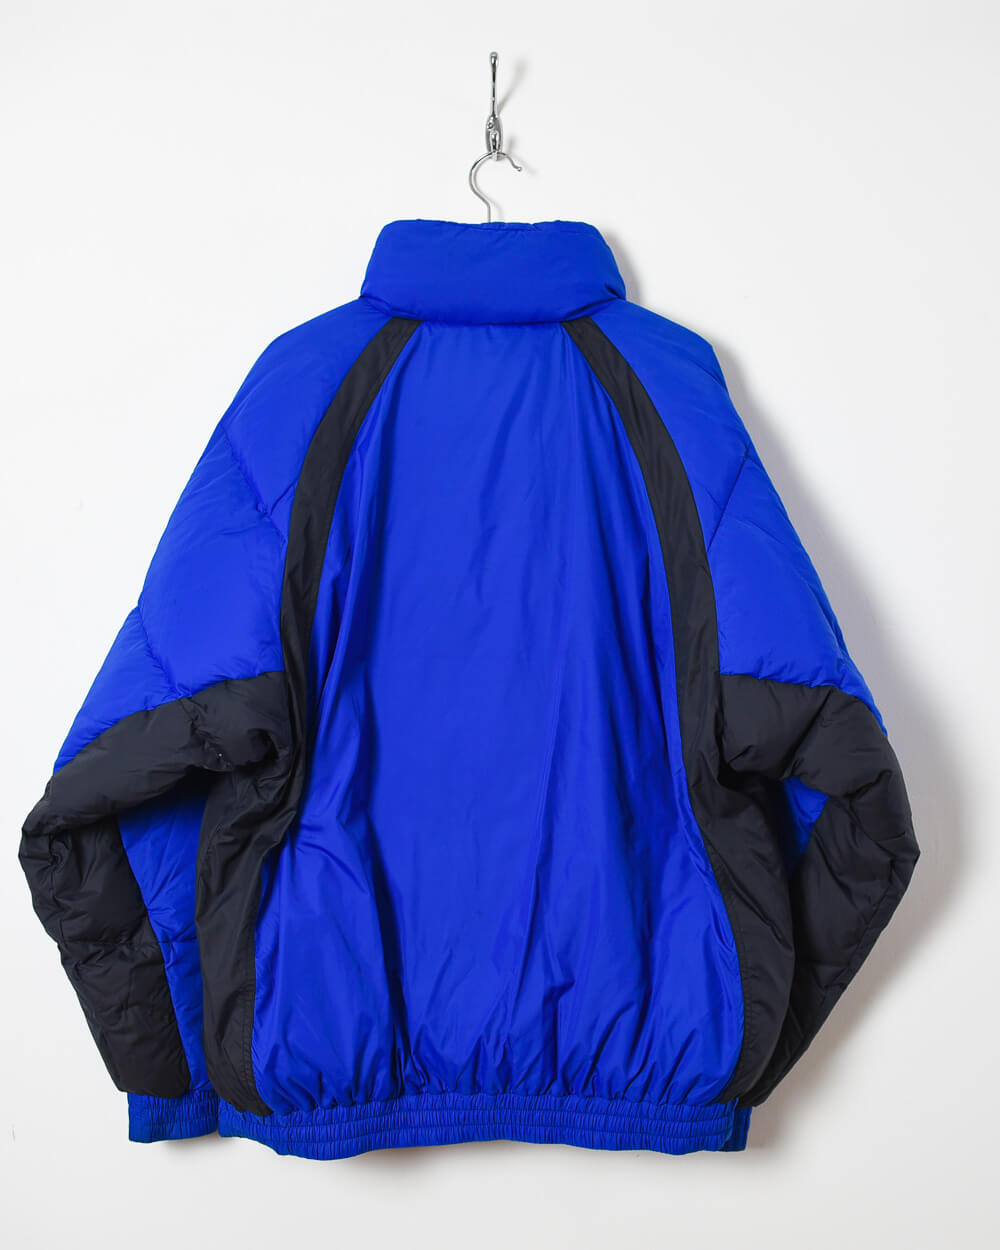 Blue Fila Winter Coat - Large